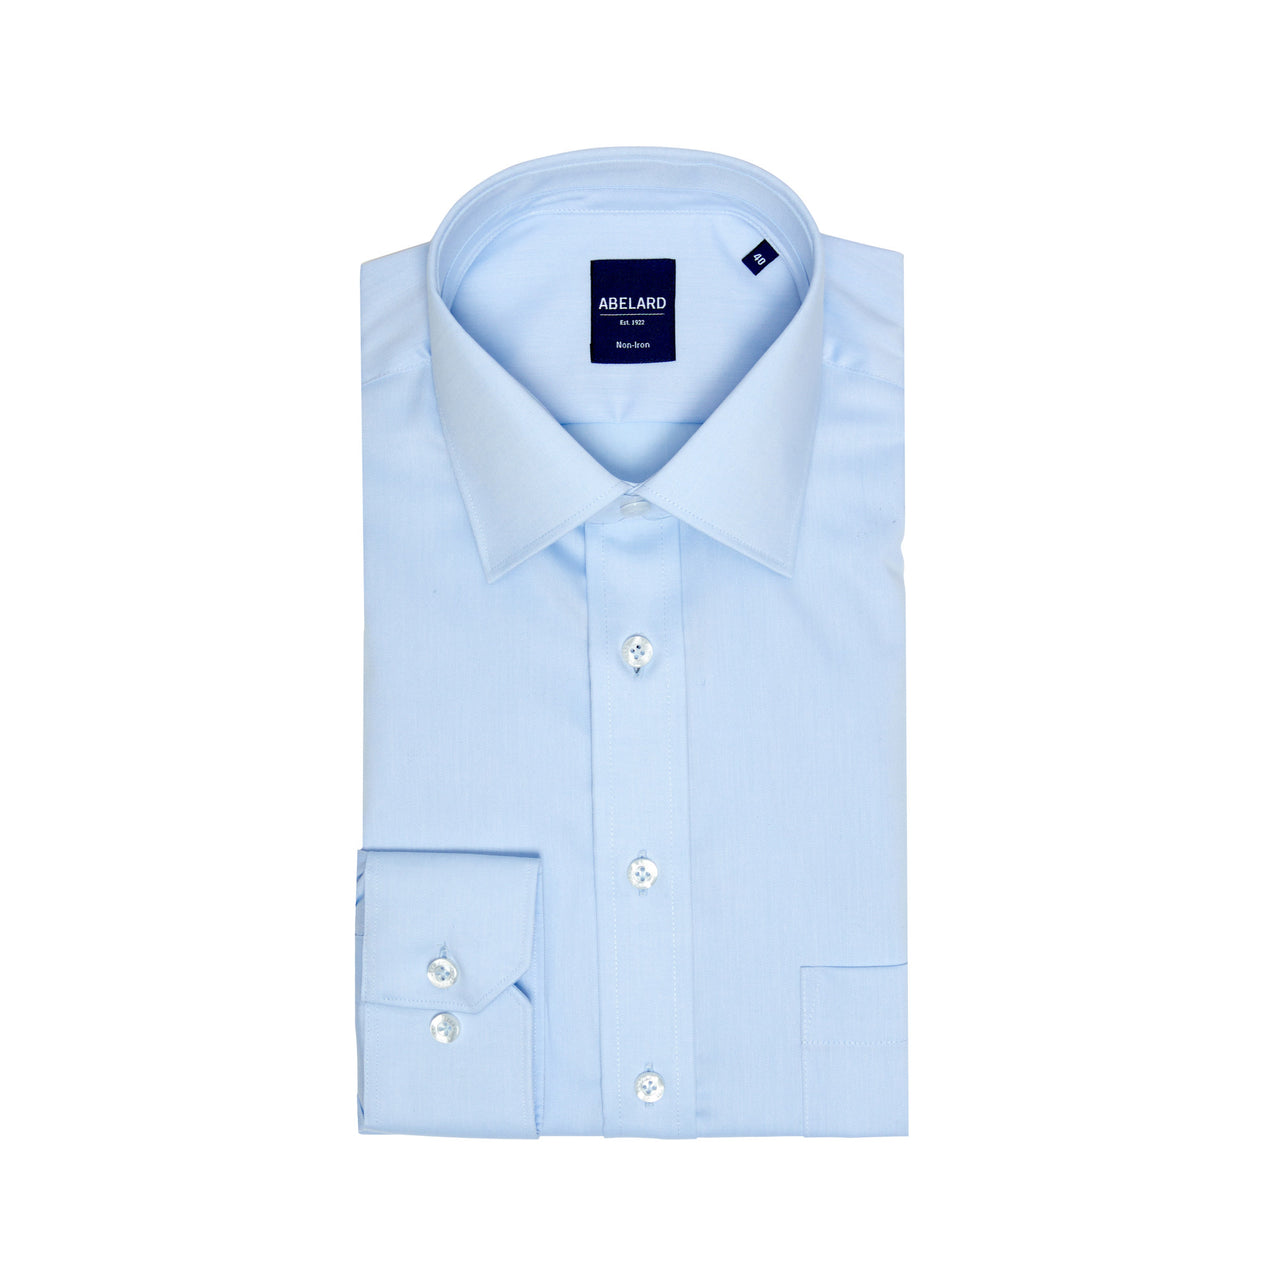 ABELARD Super Non-Iron Cotton Twill Shirt